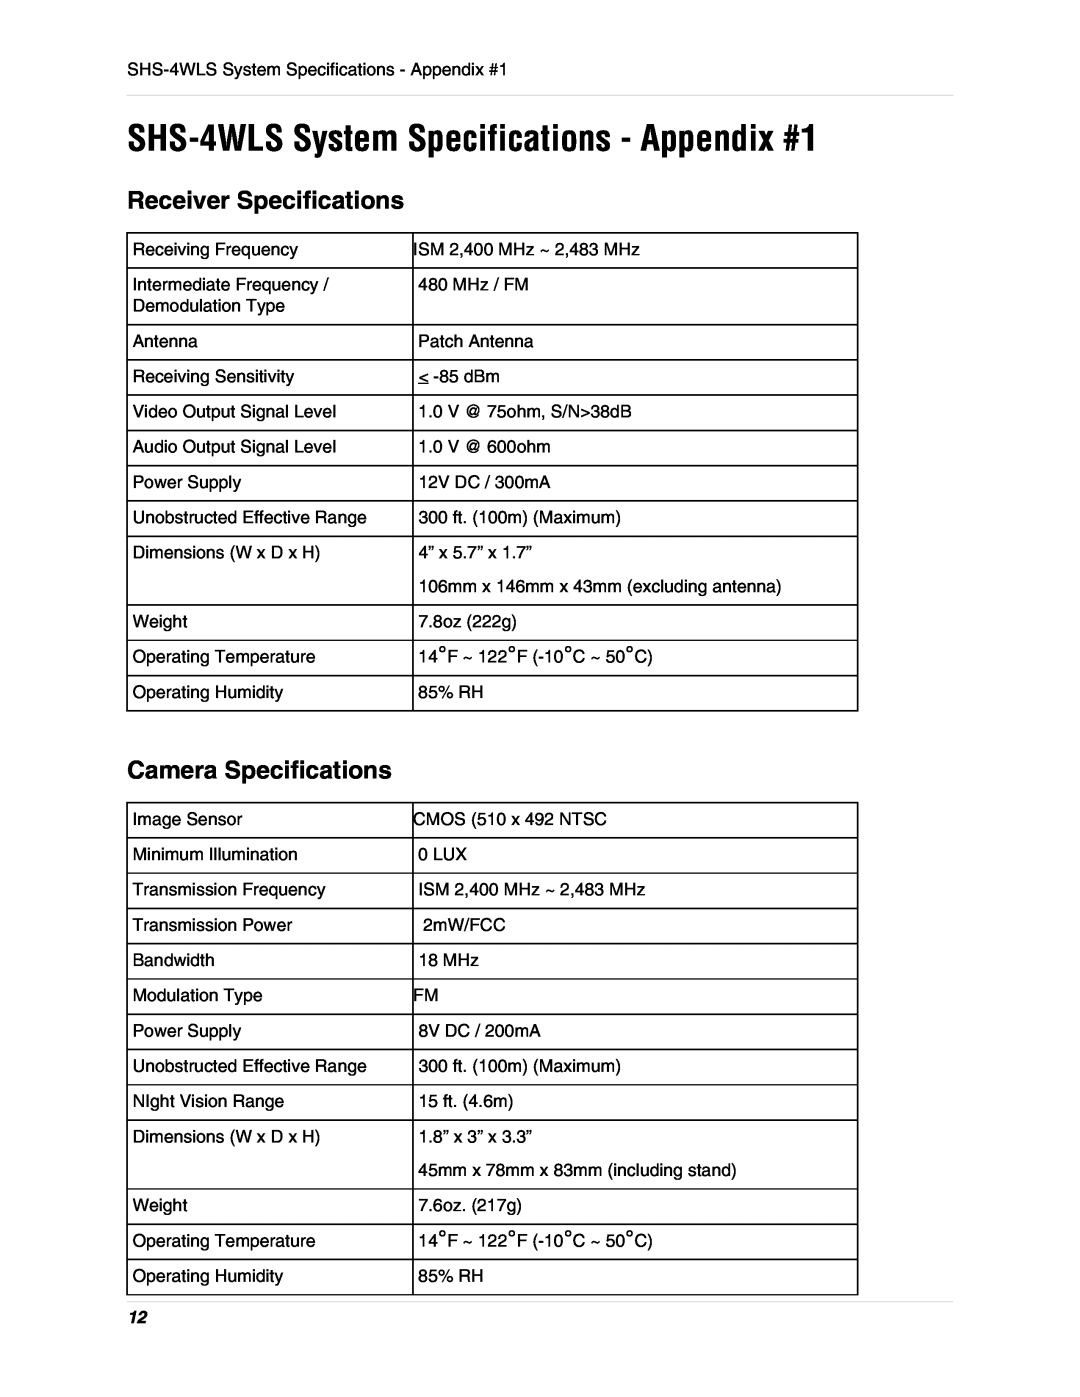 LOREX Technology SHS-4WLSSystem Specifications - Appendix #1, Receiver Specifications, Camera Specifications 